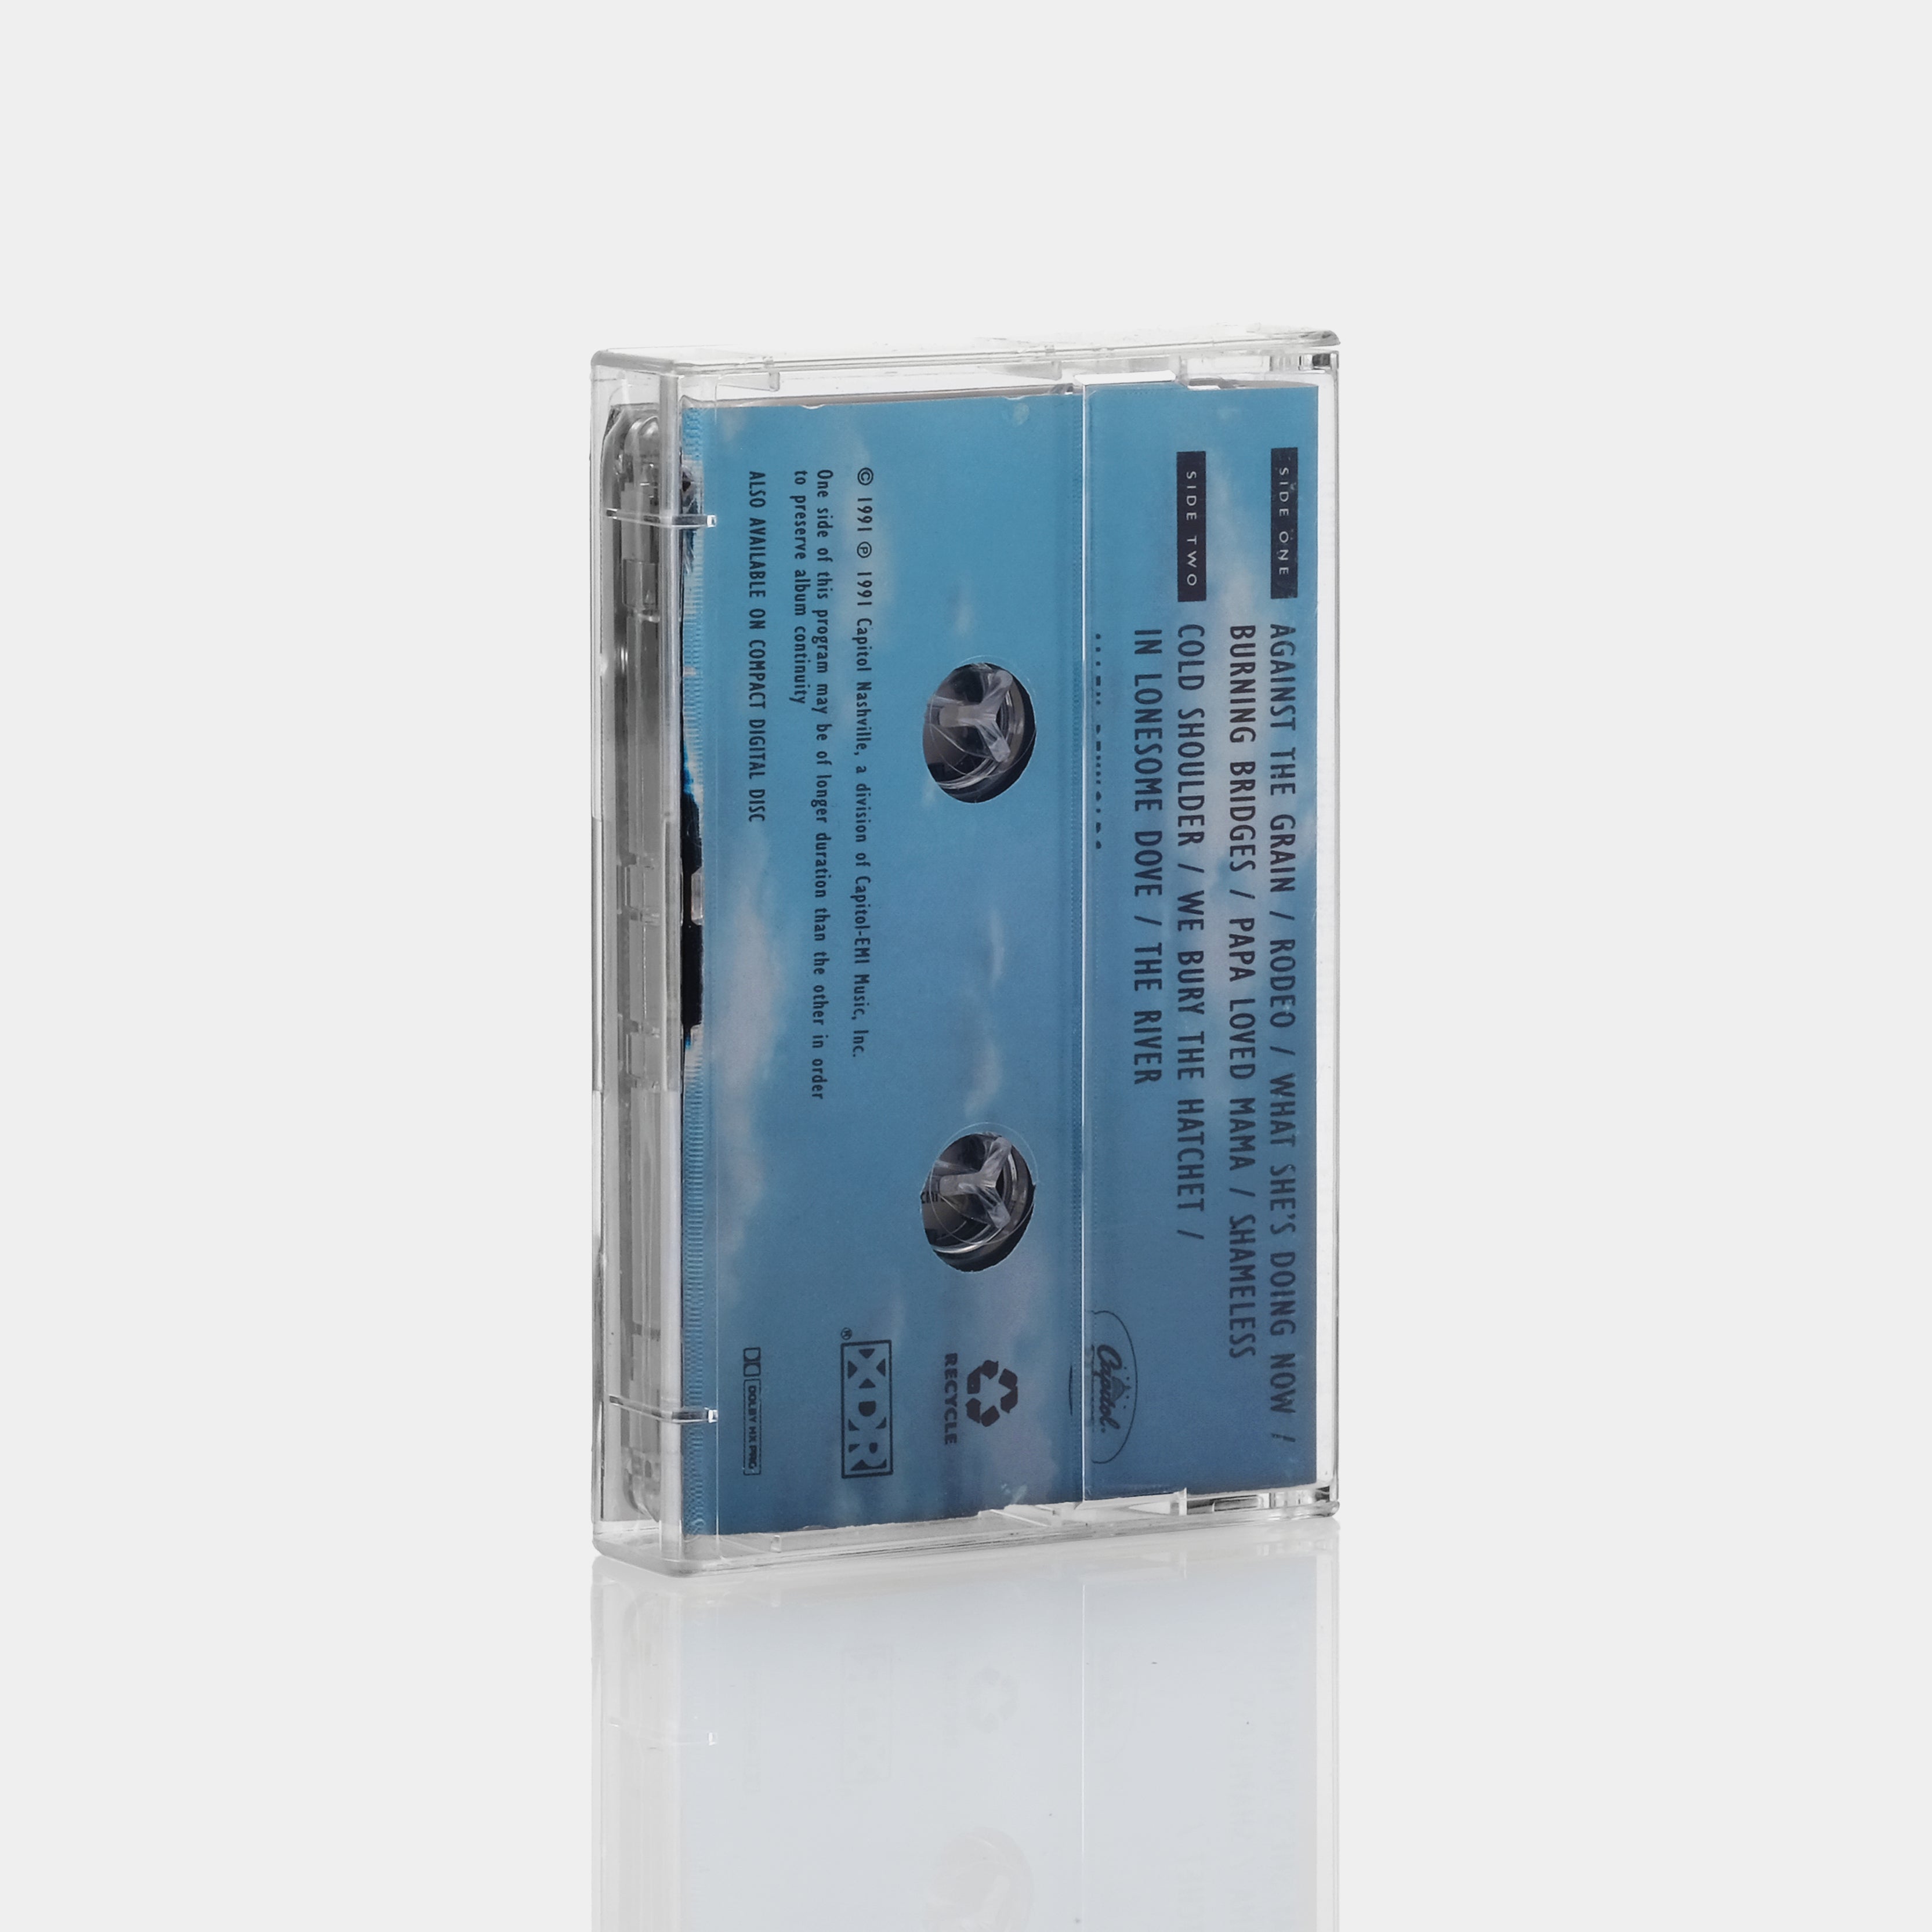 Garth Brooks - Ropin' The Wind Cassette Tape